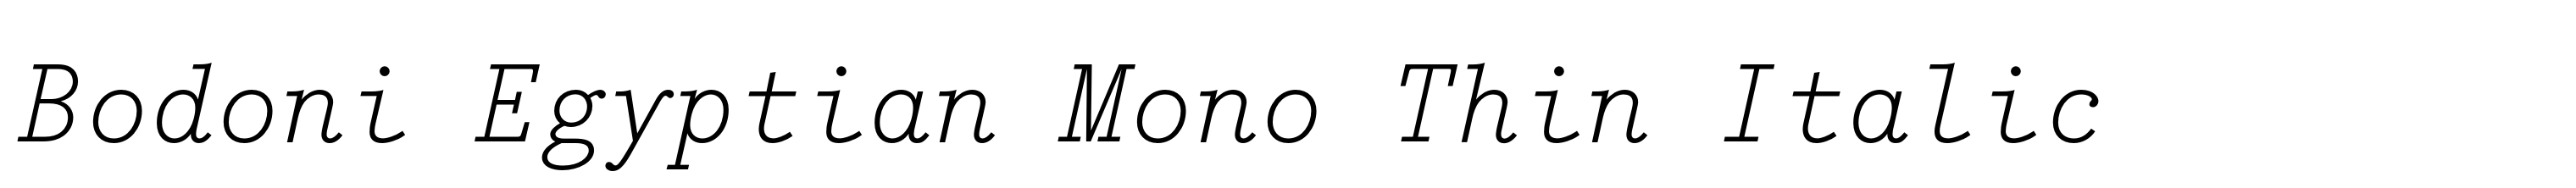 Bodoni Egyptian Mono Thin Italic